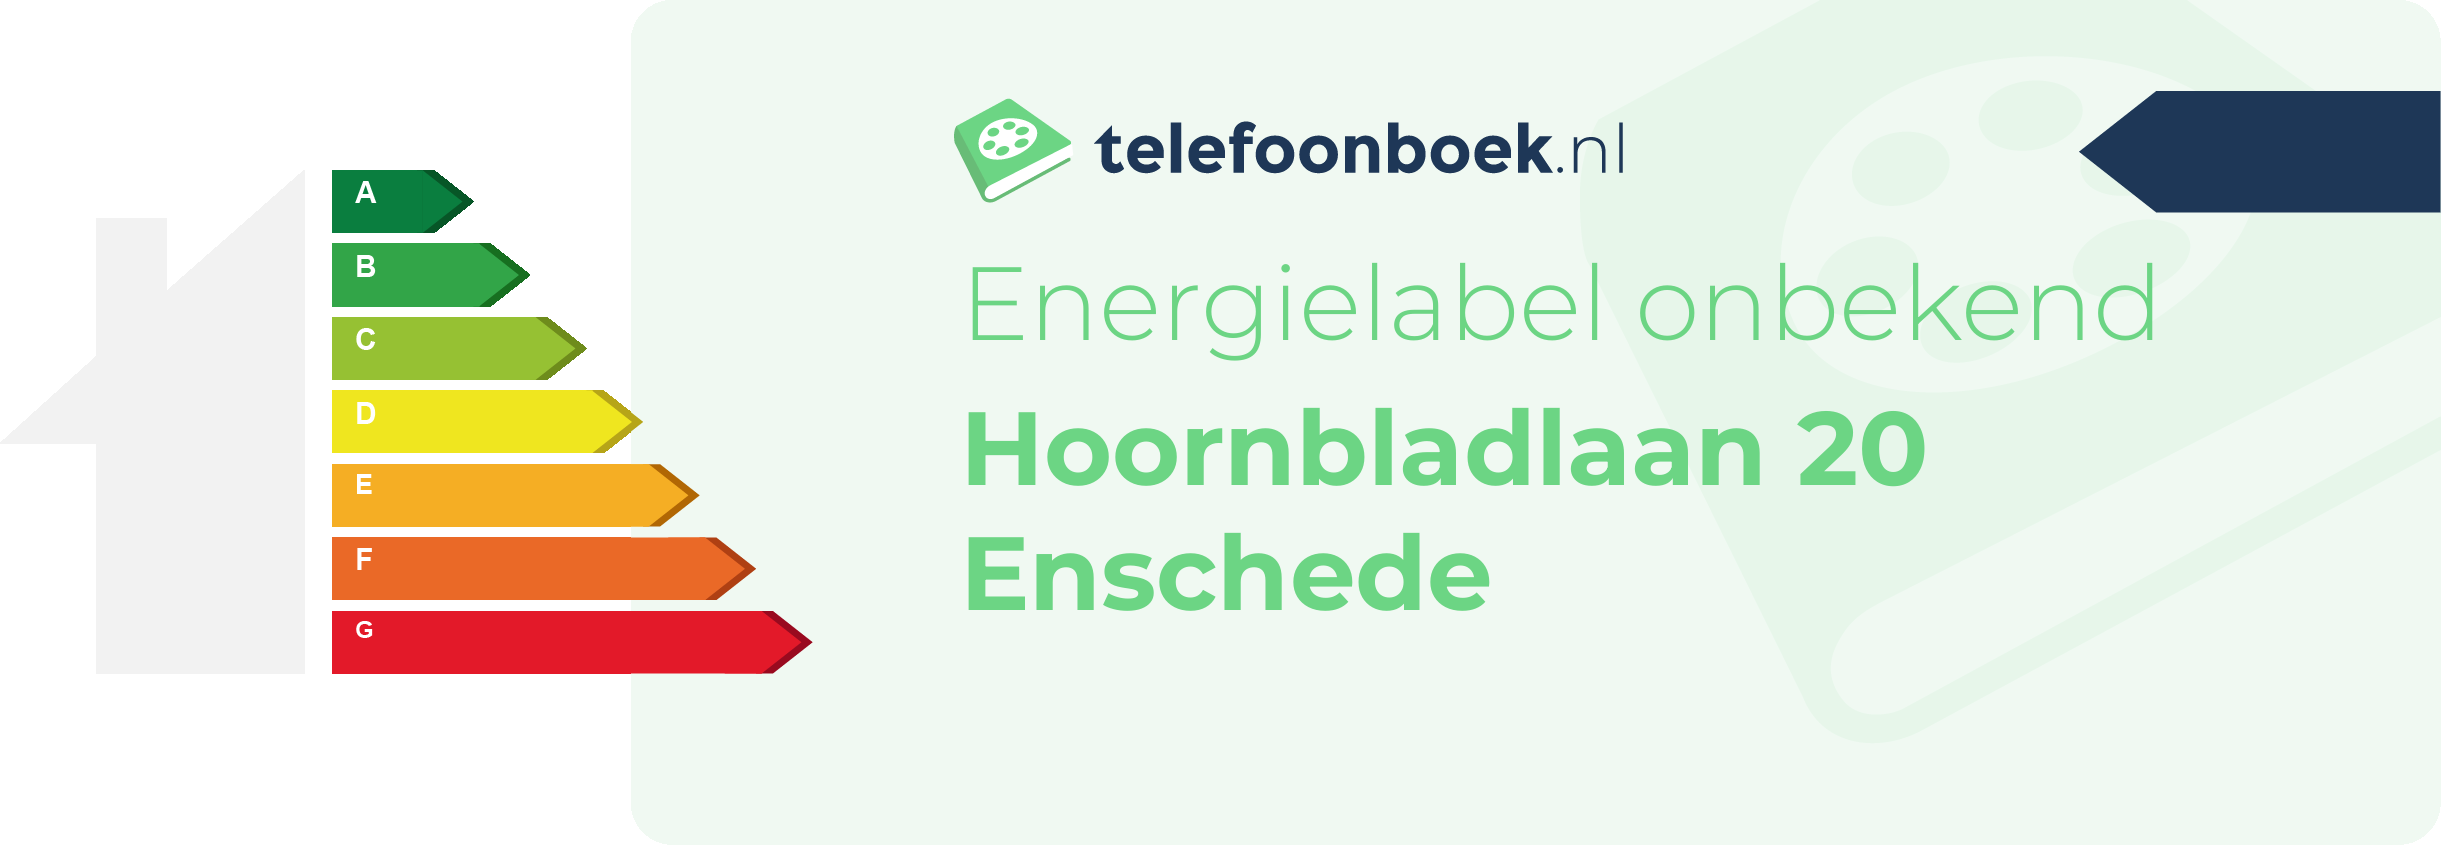 Energielabel Hoornbladlaan 20 Enschede